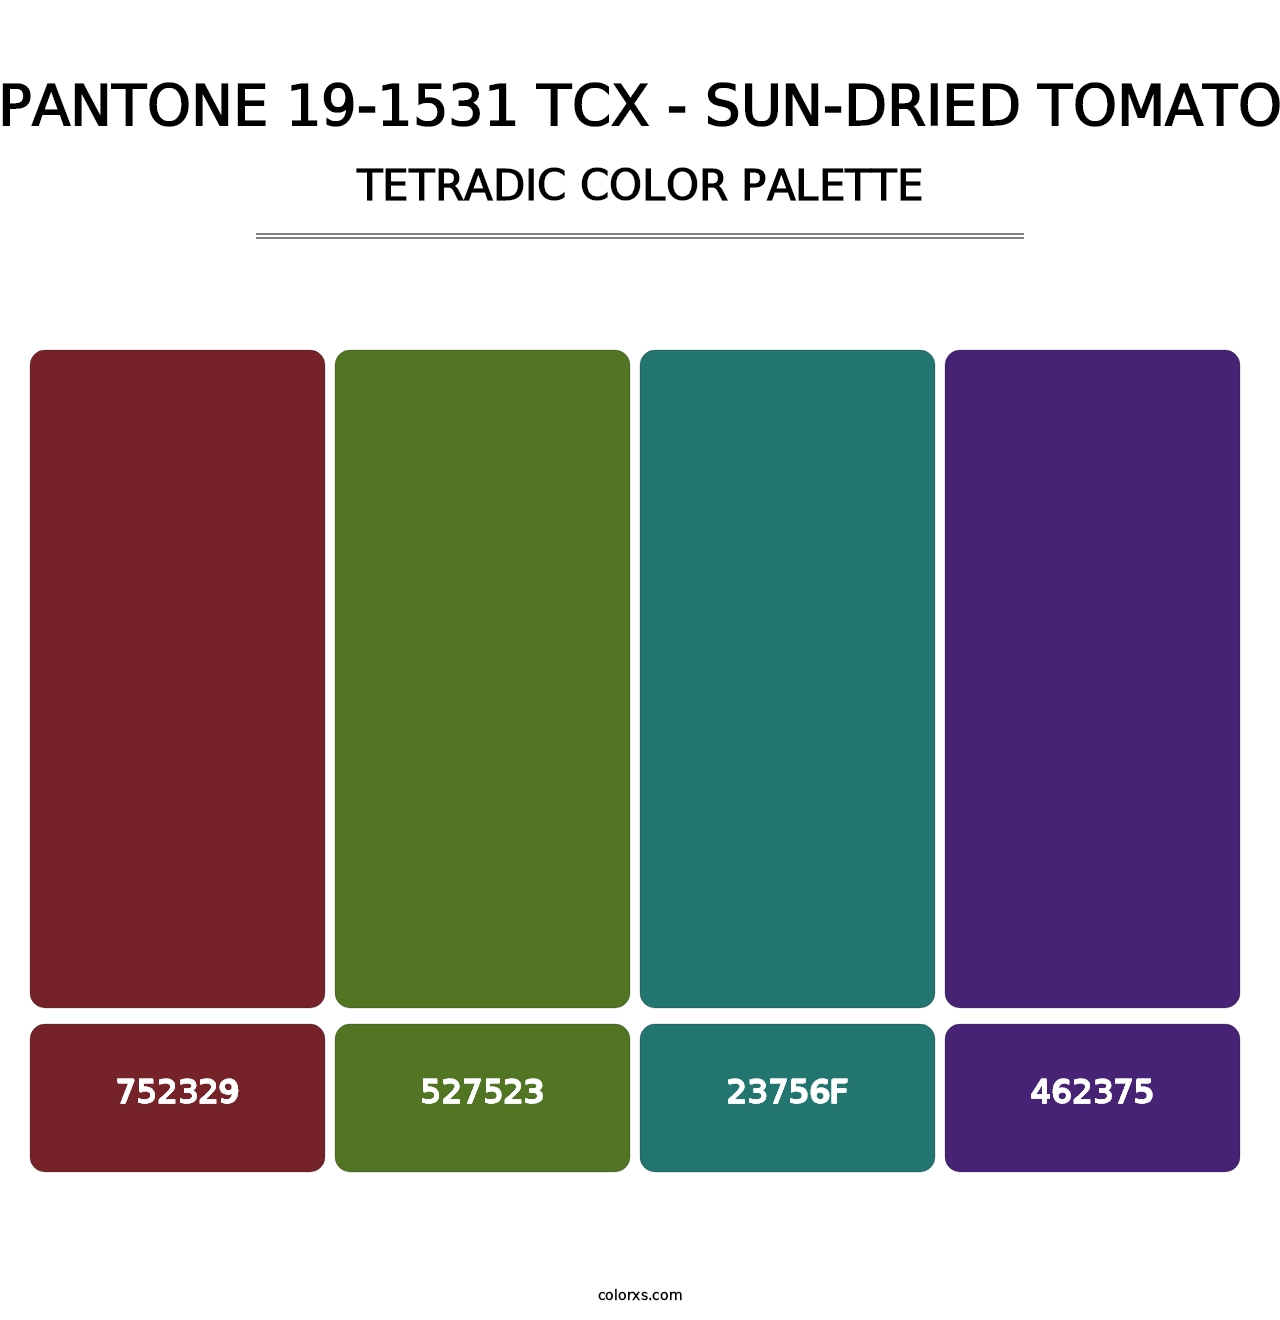 PANTONE 19-1531 TCX - Sun-Dried Tomato - Tetradic Color Palette